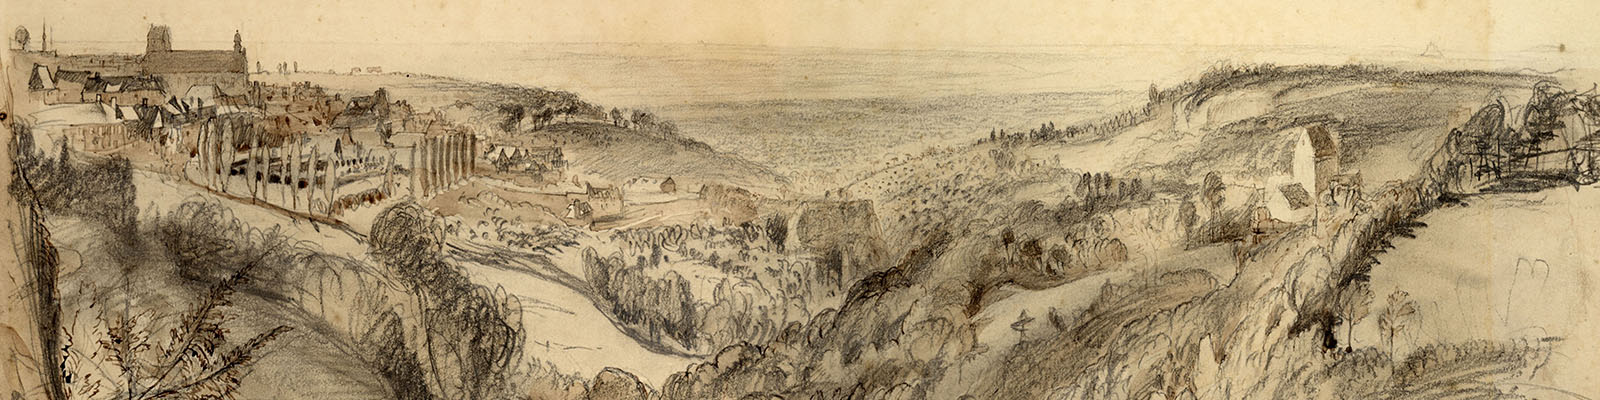 John Ruskin, Avranches looking towards Mont St Michel